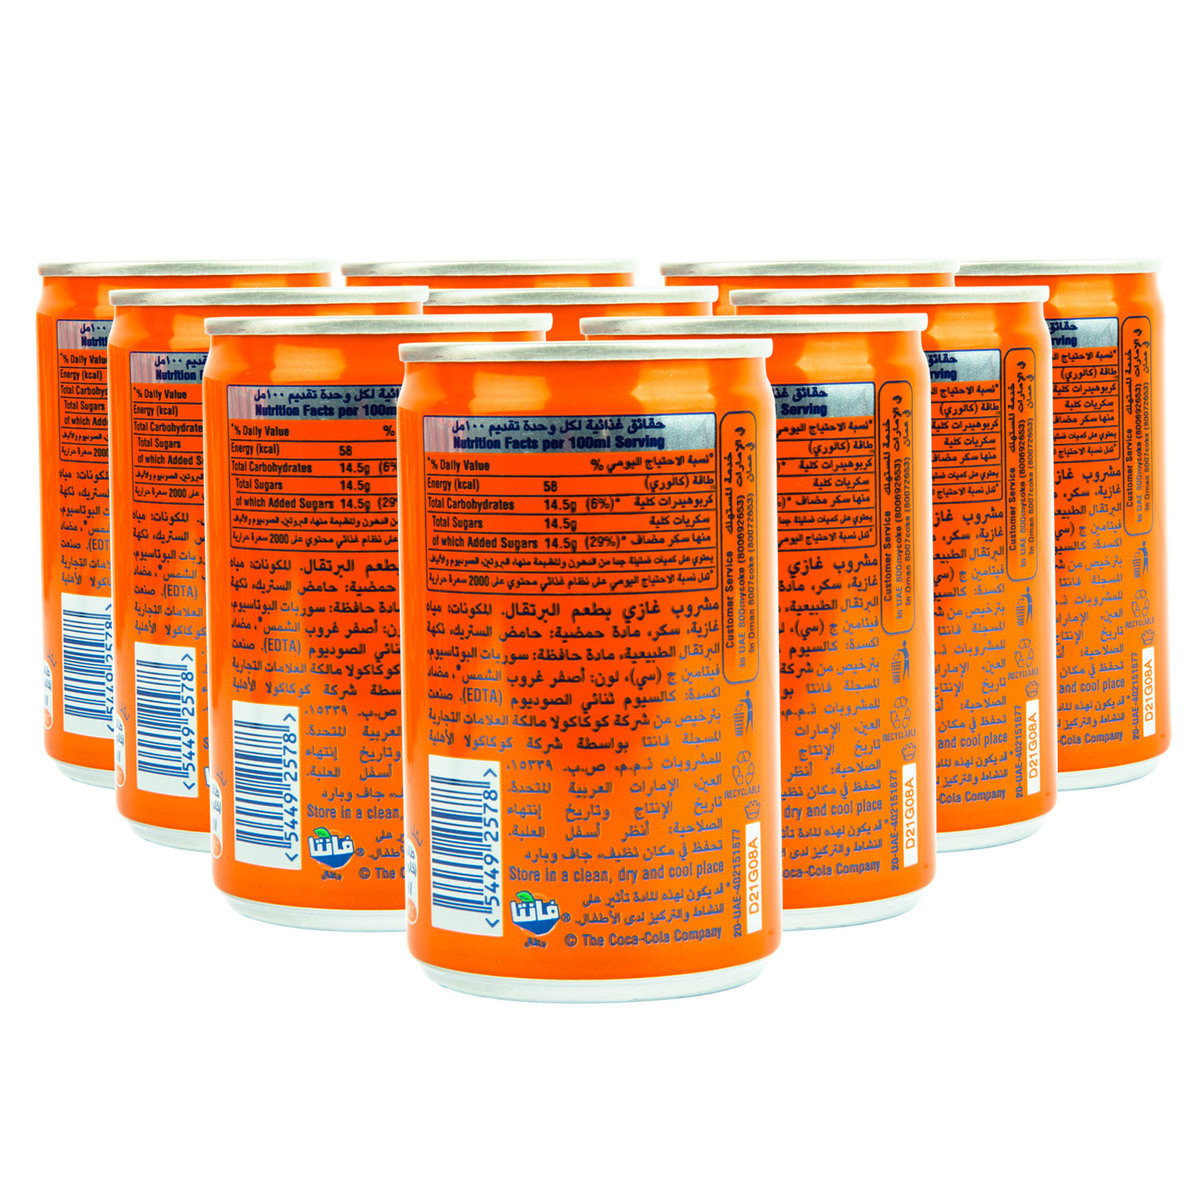 Fanta Orange Can Value Pack 10 x 150ml